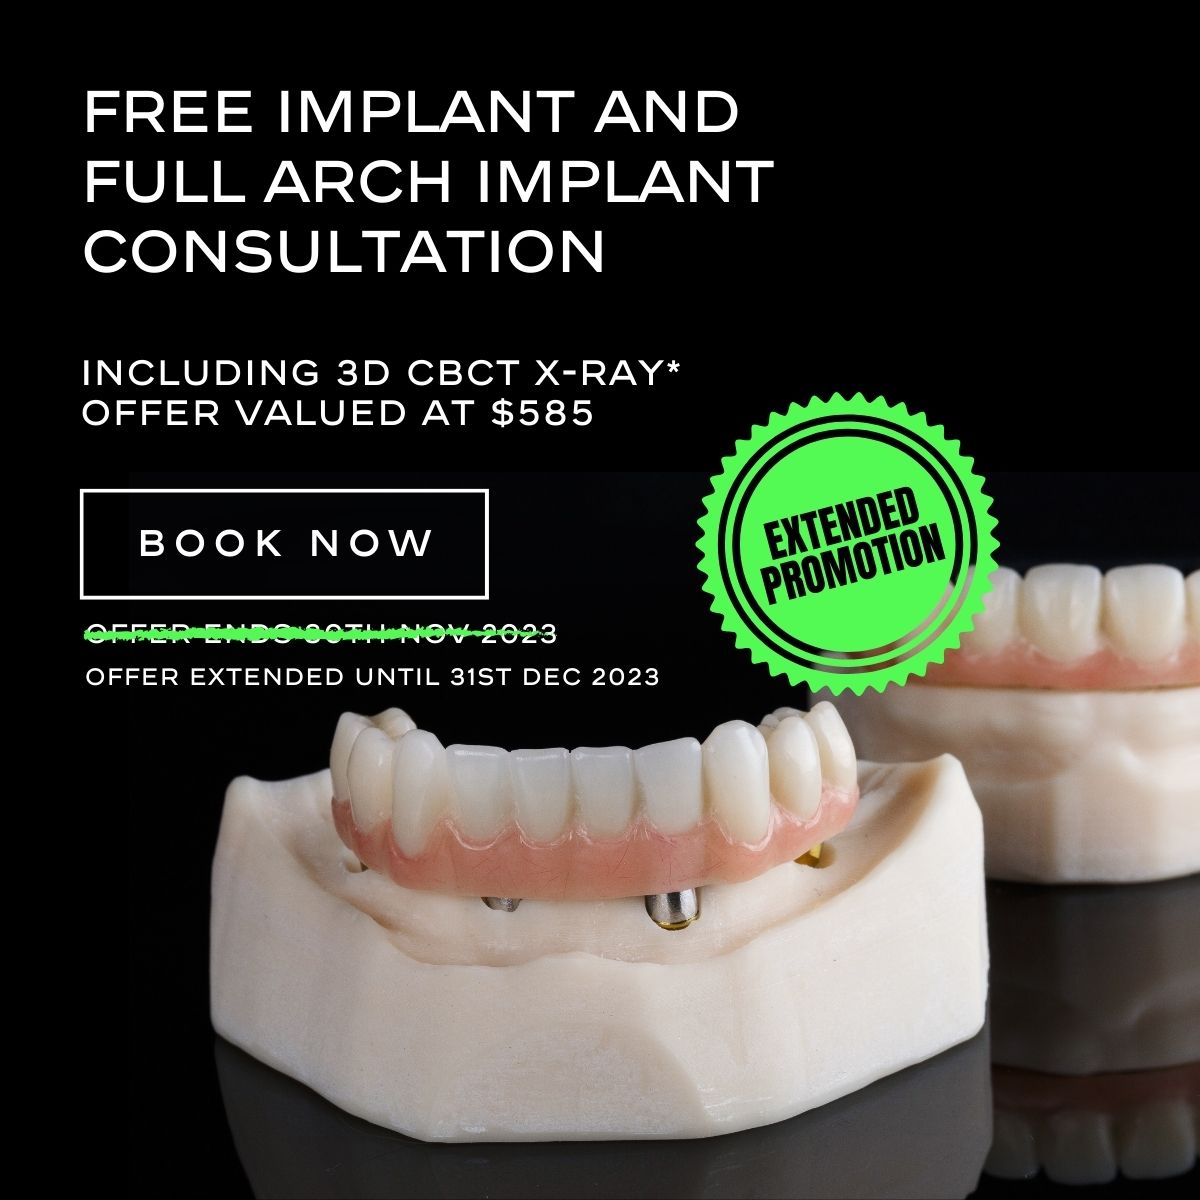 Free Implant And Full Arch Implant Consultation Near Sydney On Pitt Street Dental